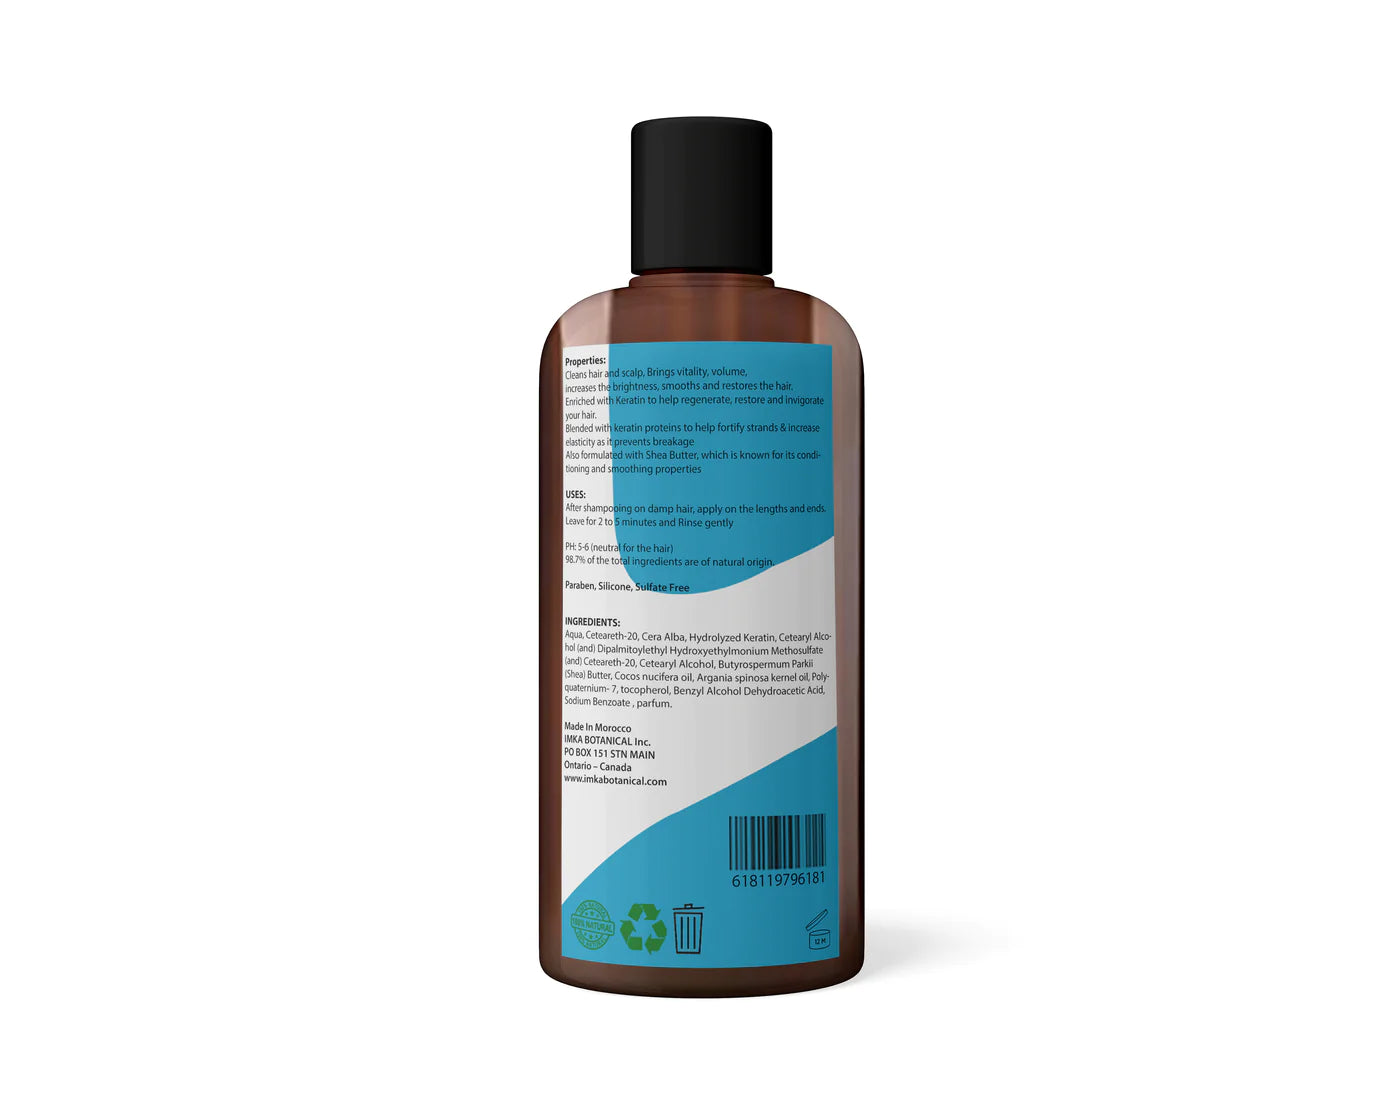 IMKA Après-shampooing phyto nettoyant – Kératine anti-casse infusée de kératine